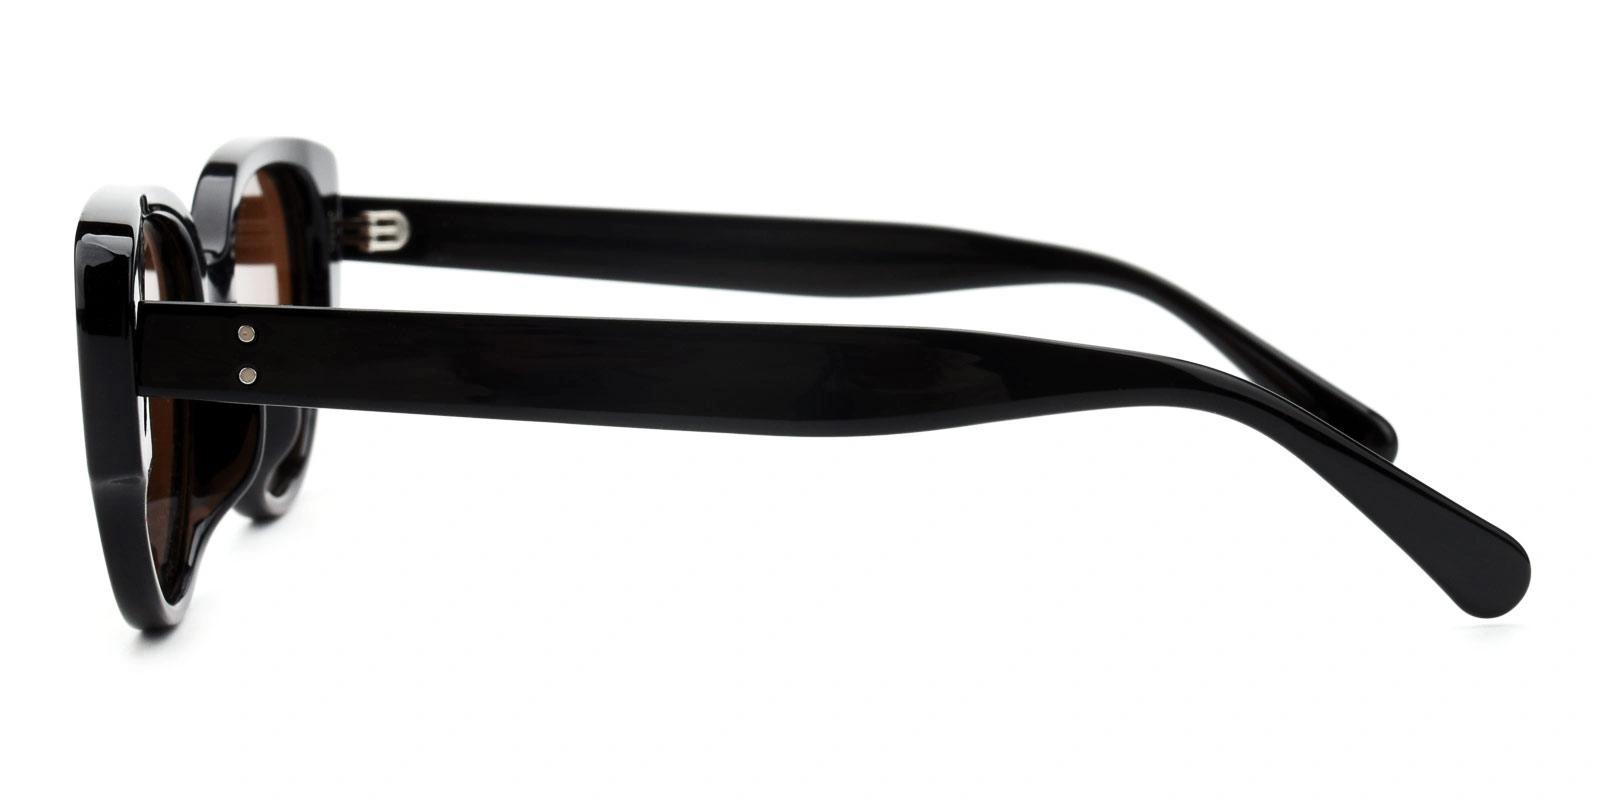 Steptic Black Acetate Sunglasses , UniversalBridgeFit Frames from ABBE Glasses